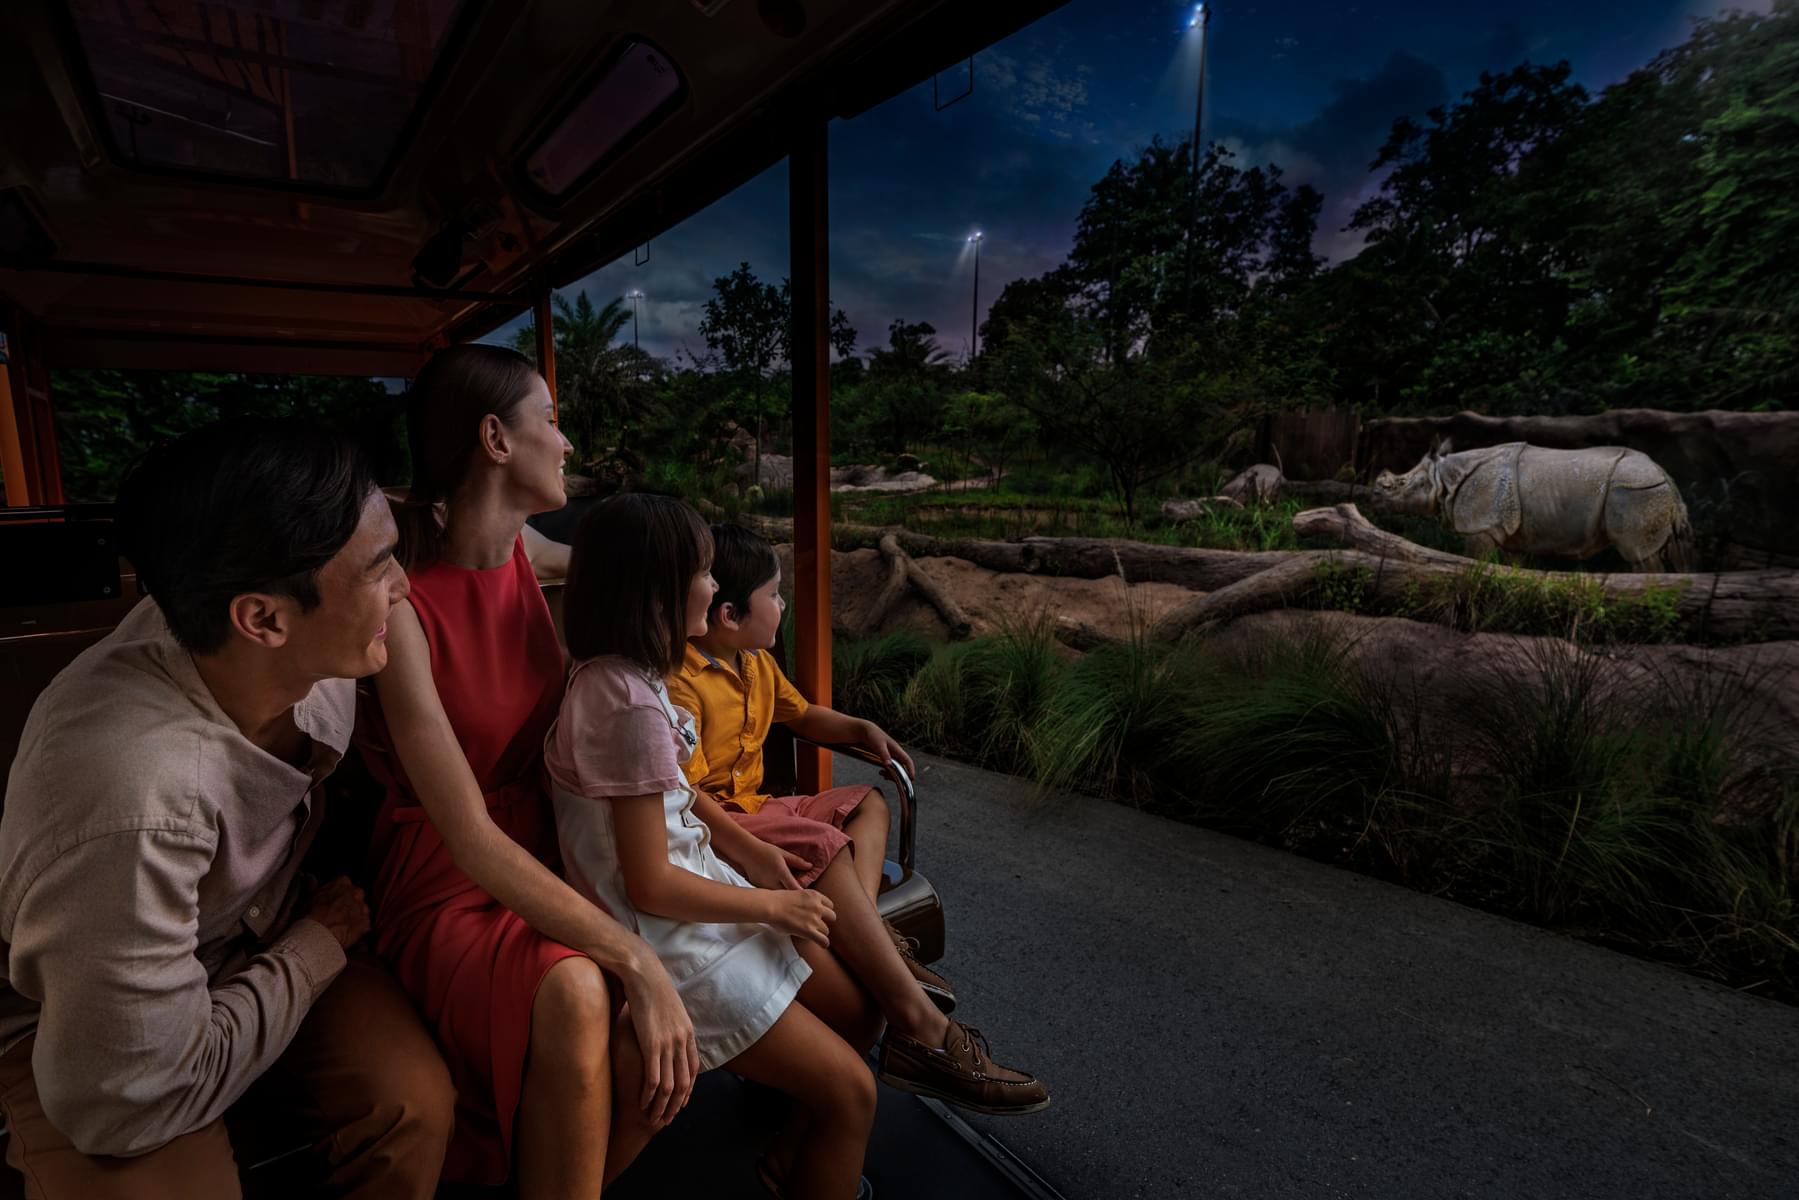 Explore the Singapore Night Safari on guided Tram ride